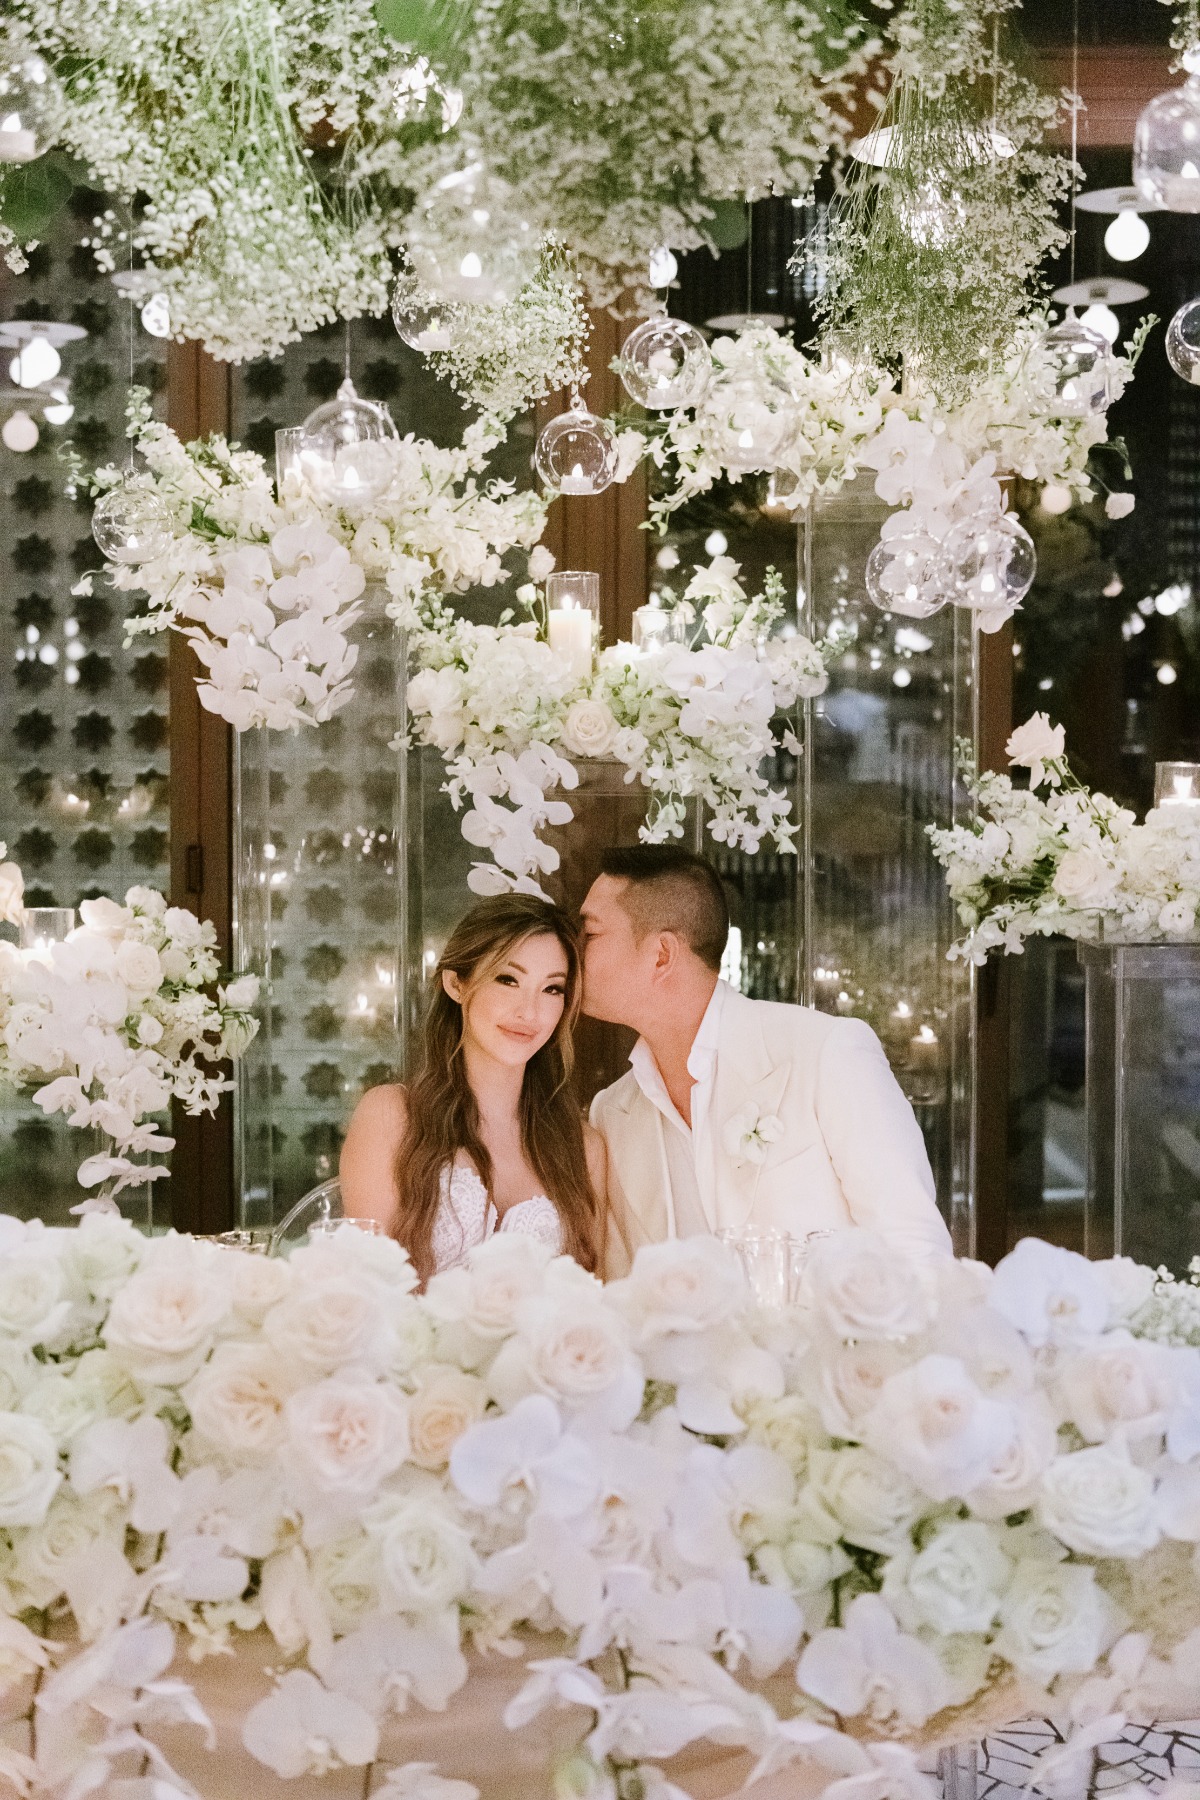 Romantic floral immersive reception